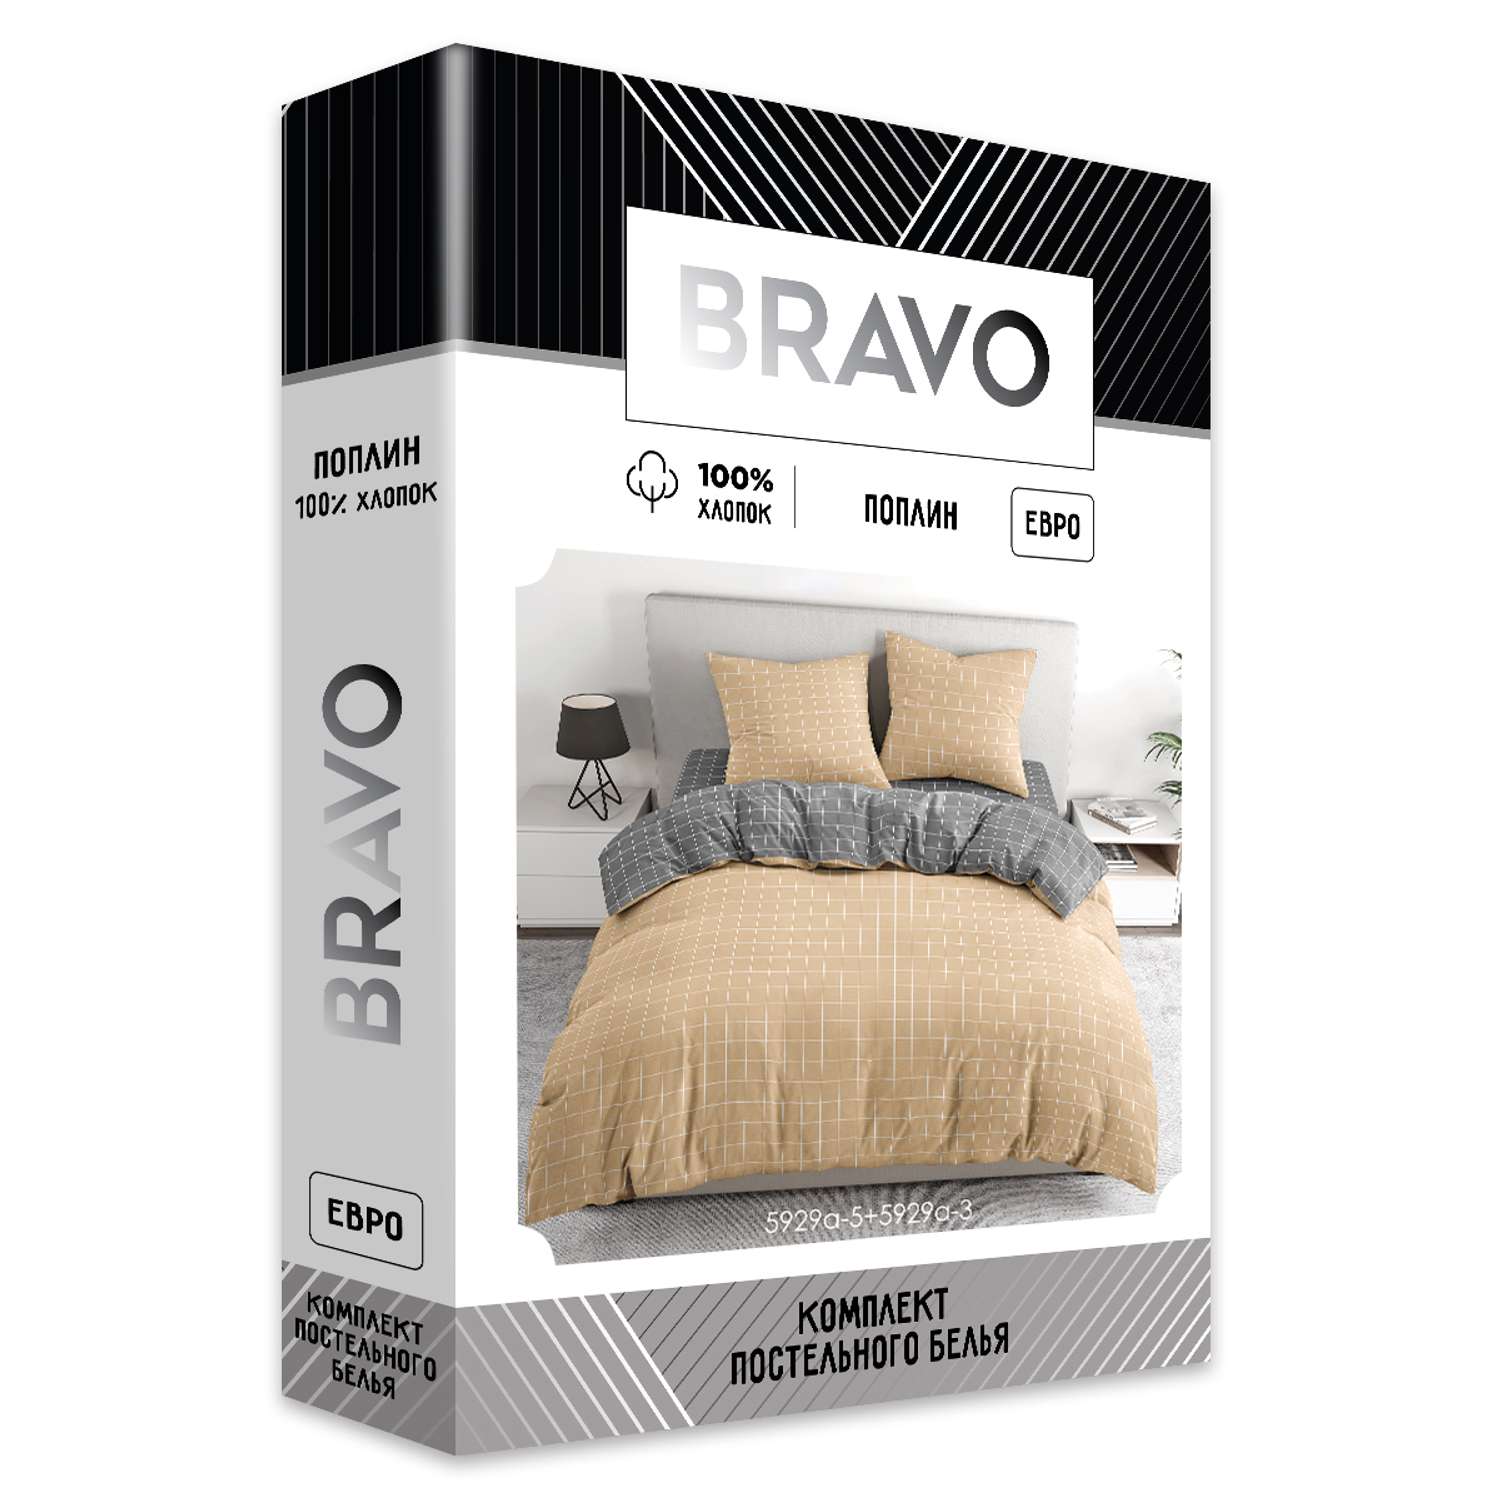 Комплект постельного белья BRAVO Клетка евро наволочки 70х70 рис.5929а-5+5929а-3 бежевый - фото 8